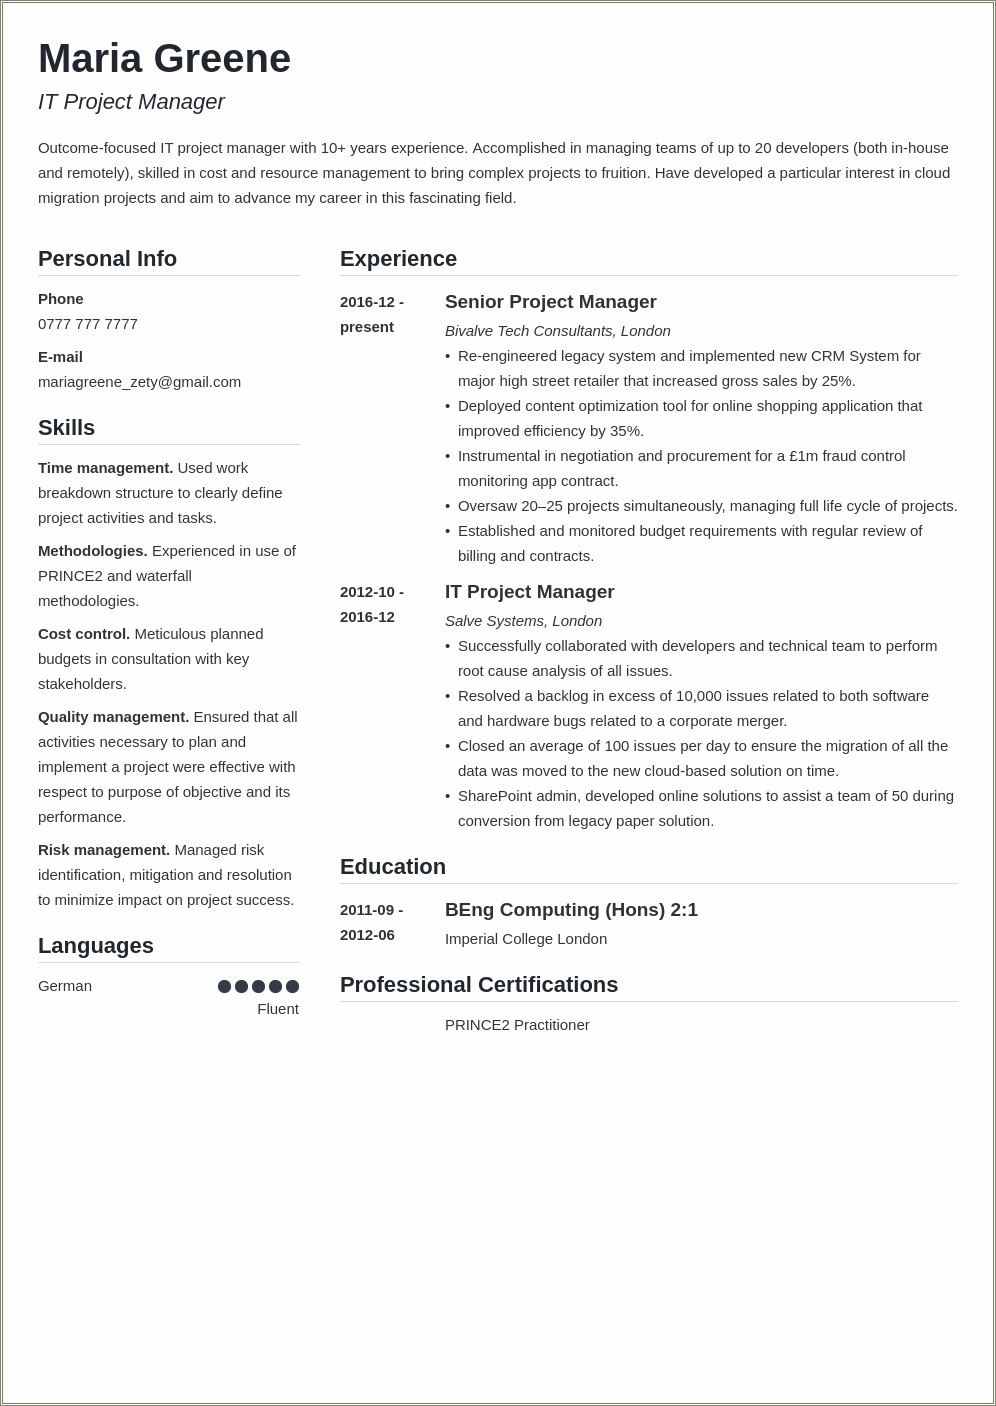 Ke Works For Program Manager Resume